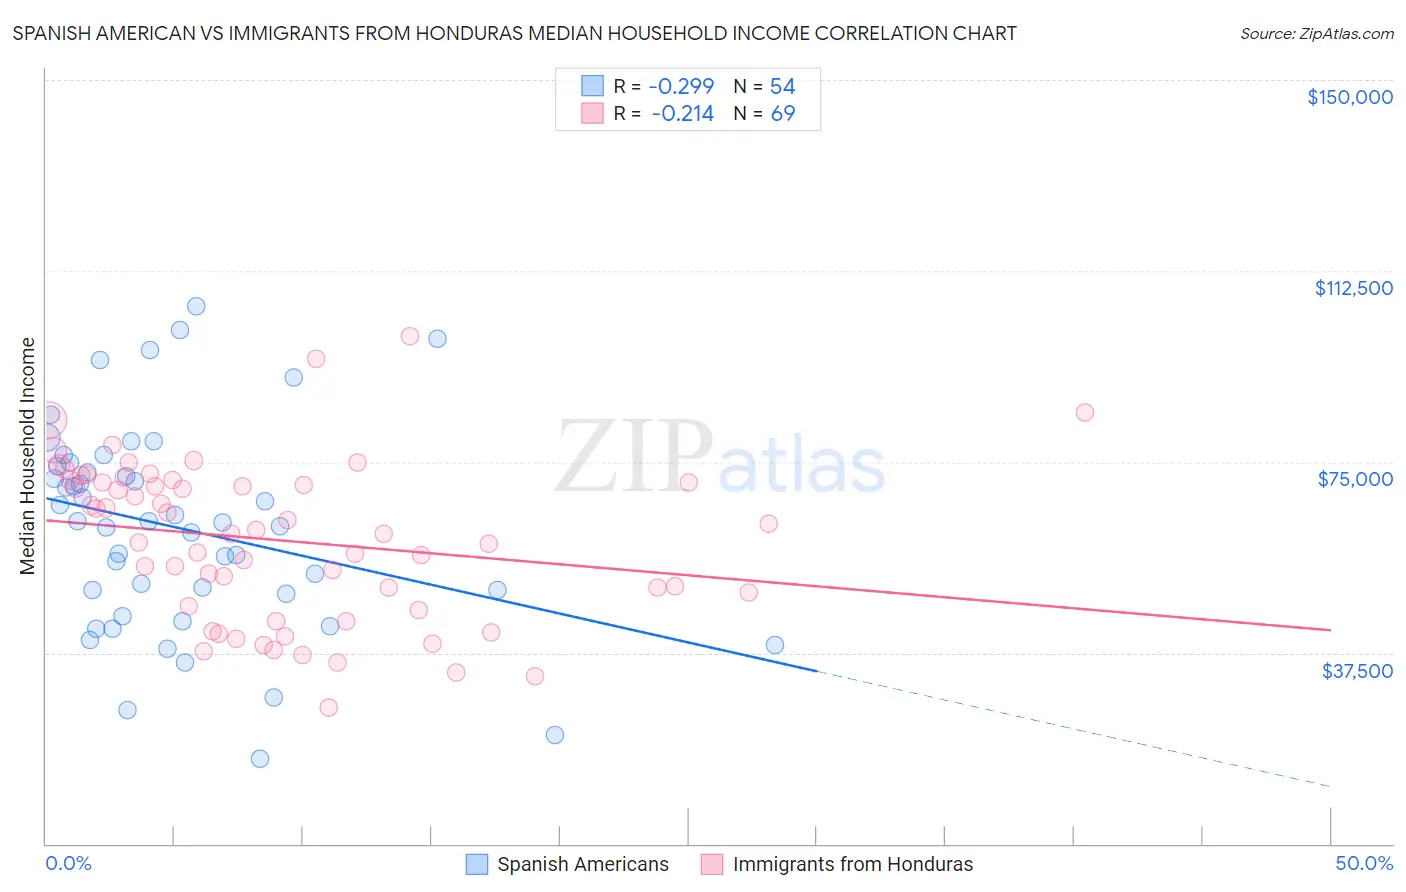 Spanish American vs Immigrants from Honduras Median Household Income